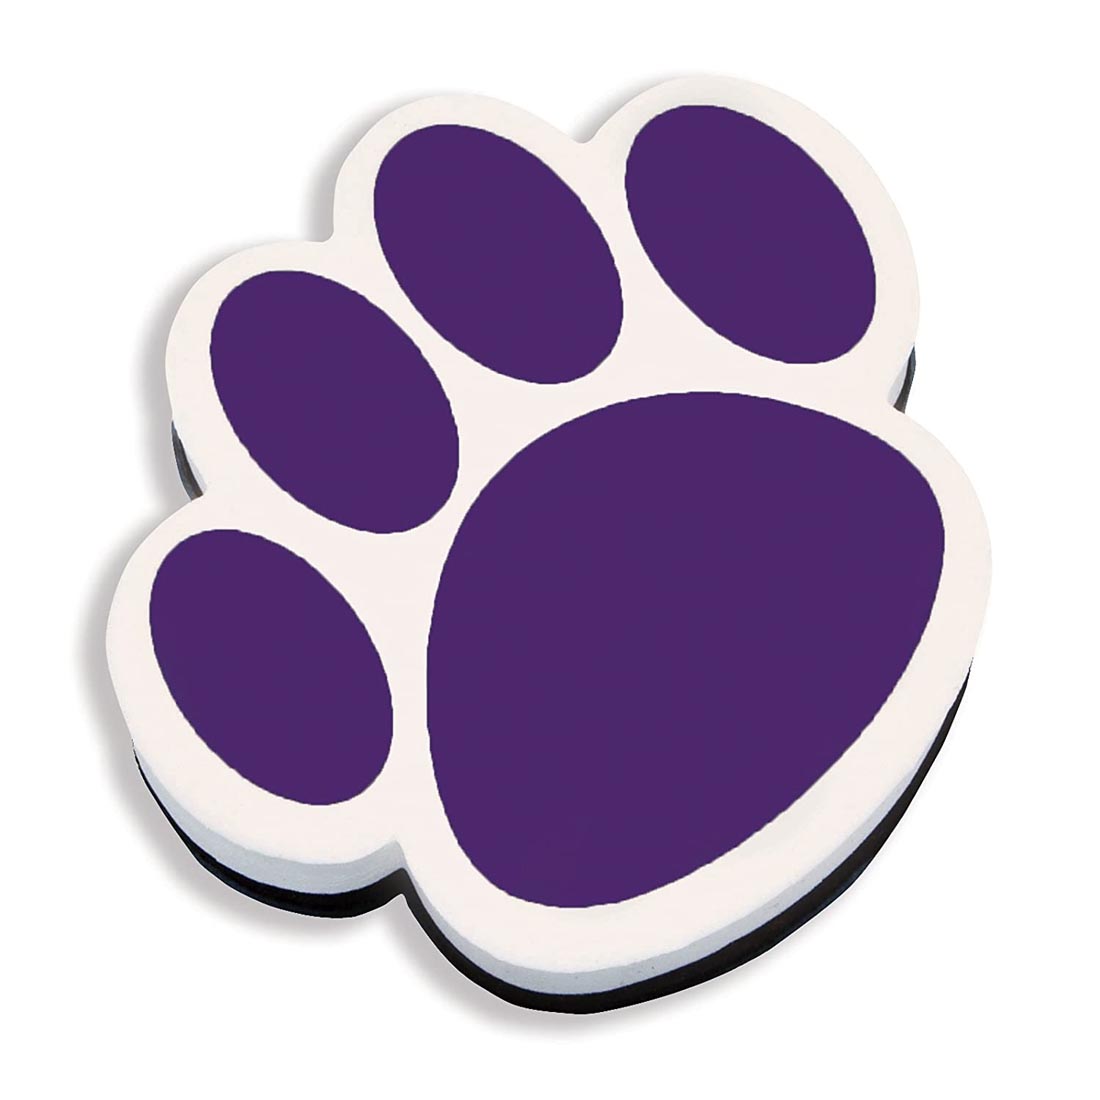 Magnetic Whiteboard Eraser shaped like a purple paw print